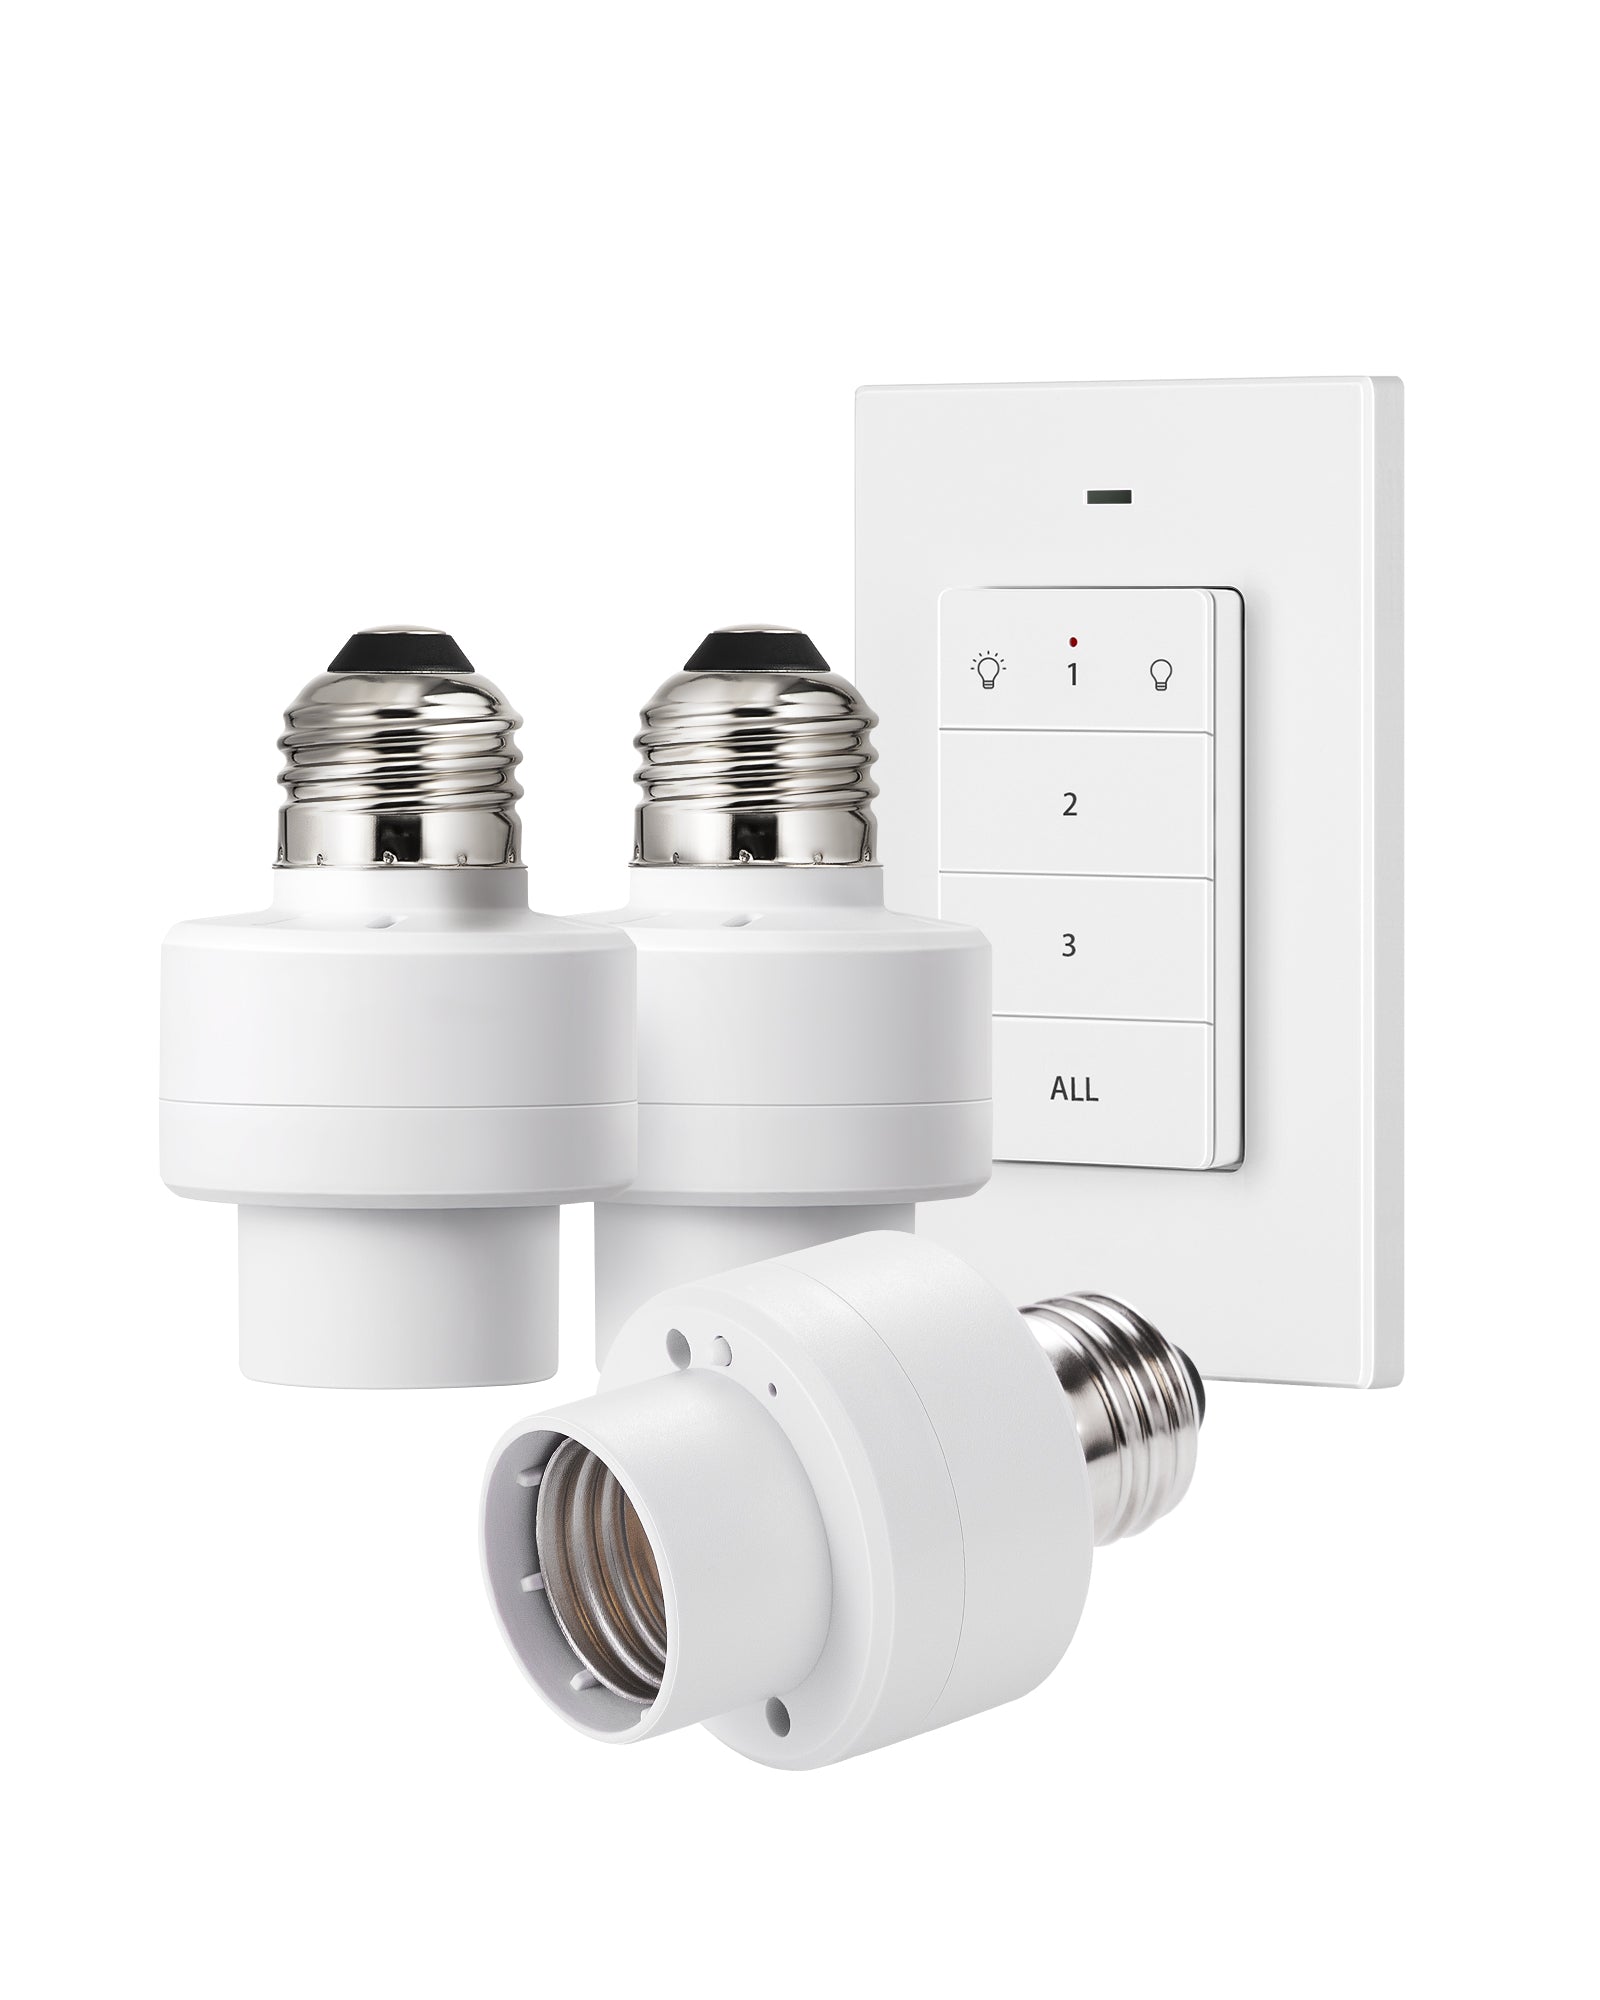 DEWENWILS Wireless Remote Control Light Socket, E26 E27 Bulb Base Holder,White